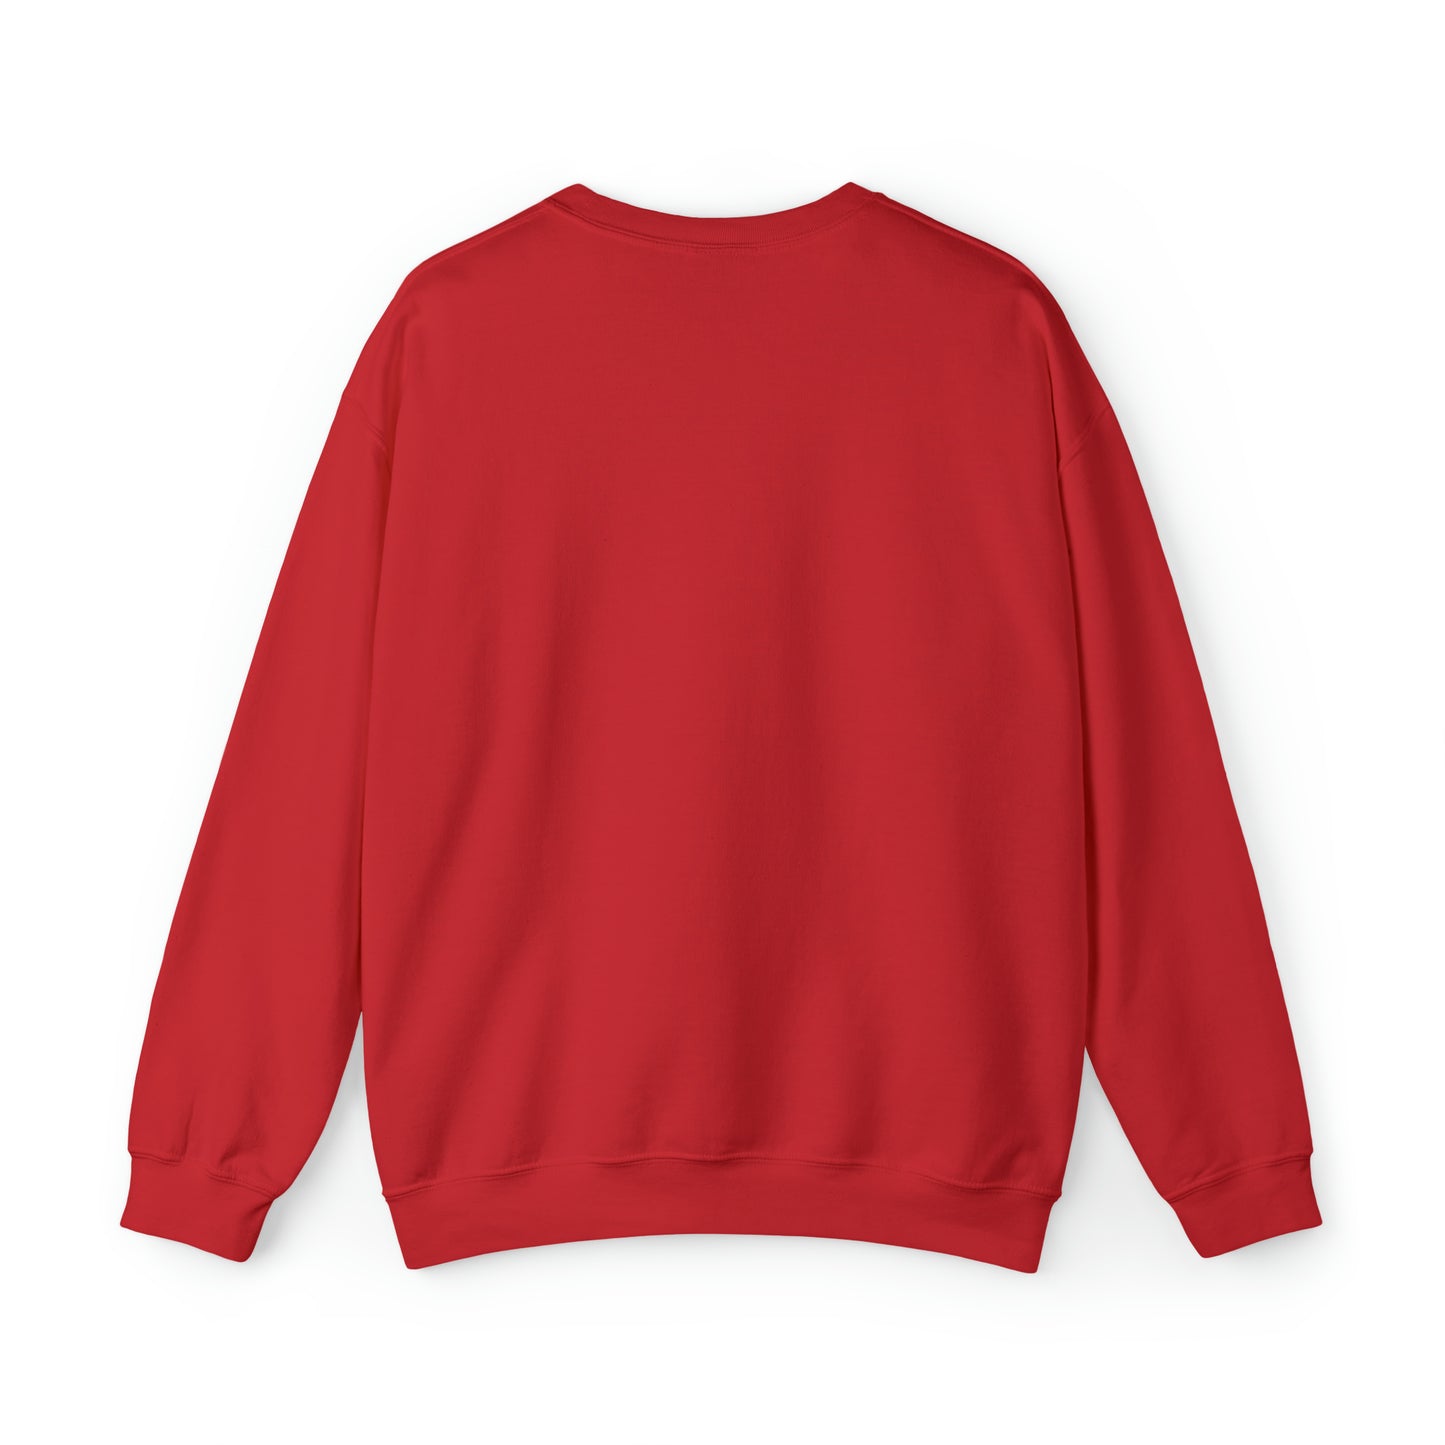 CLEANTECH Unisex Heavy Blend™ Crewneck Sweatshirt